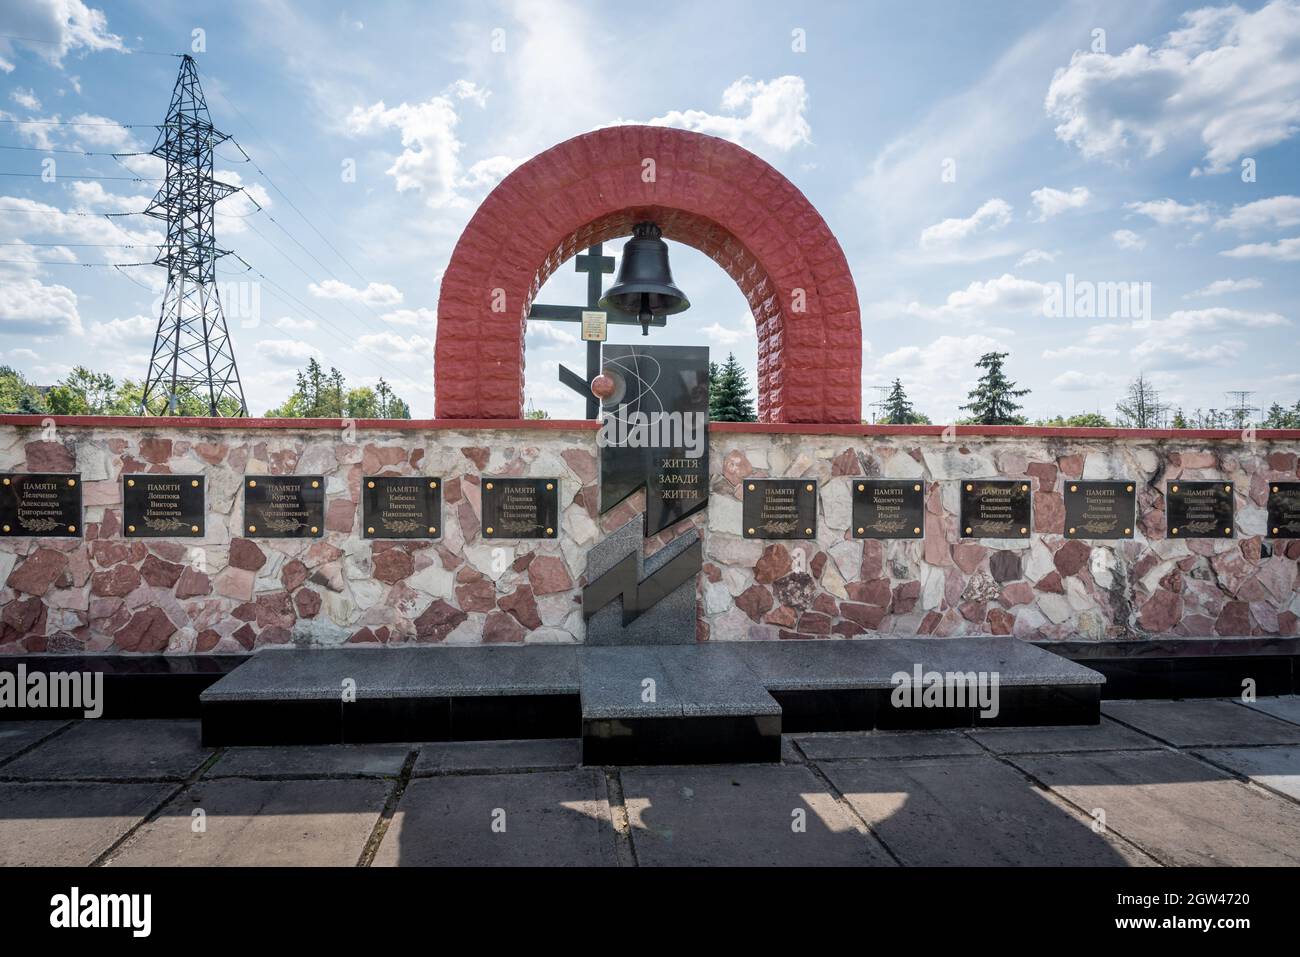 Memorial Life for Life im Kernkraftwerk Tschernobyl - Gedenkmauer mit Opfernamen der Katastrophe von Tschernobyl - Tschernobyl-Sperrzone, Ukraine Stockfoto